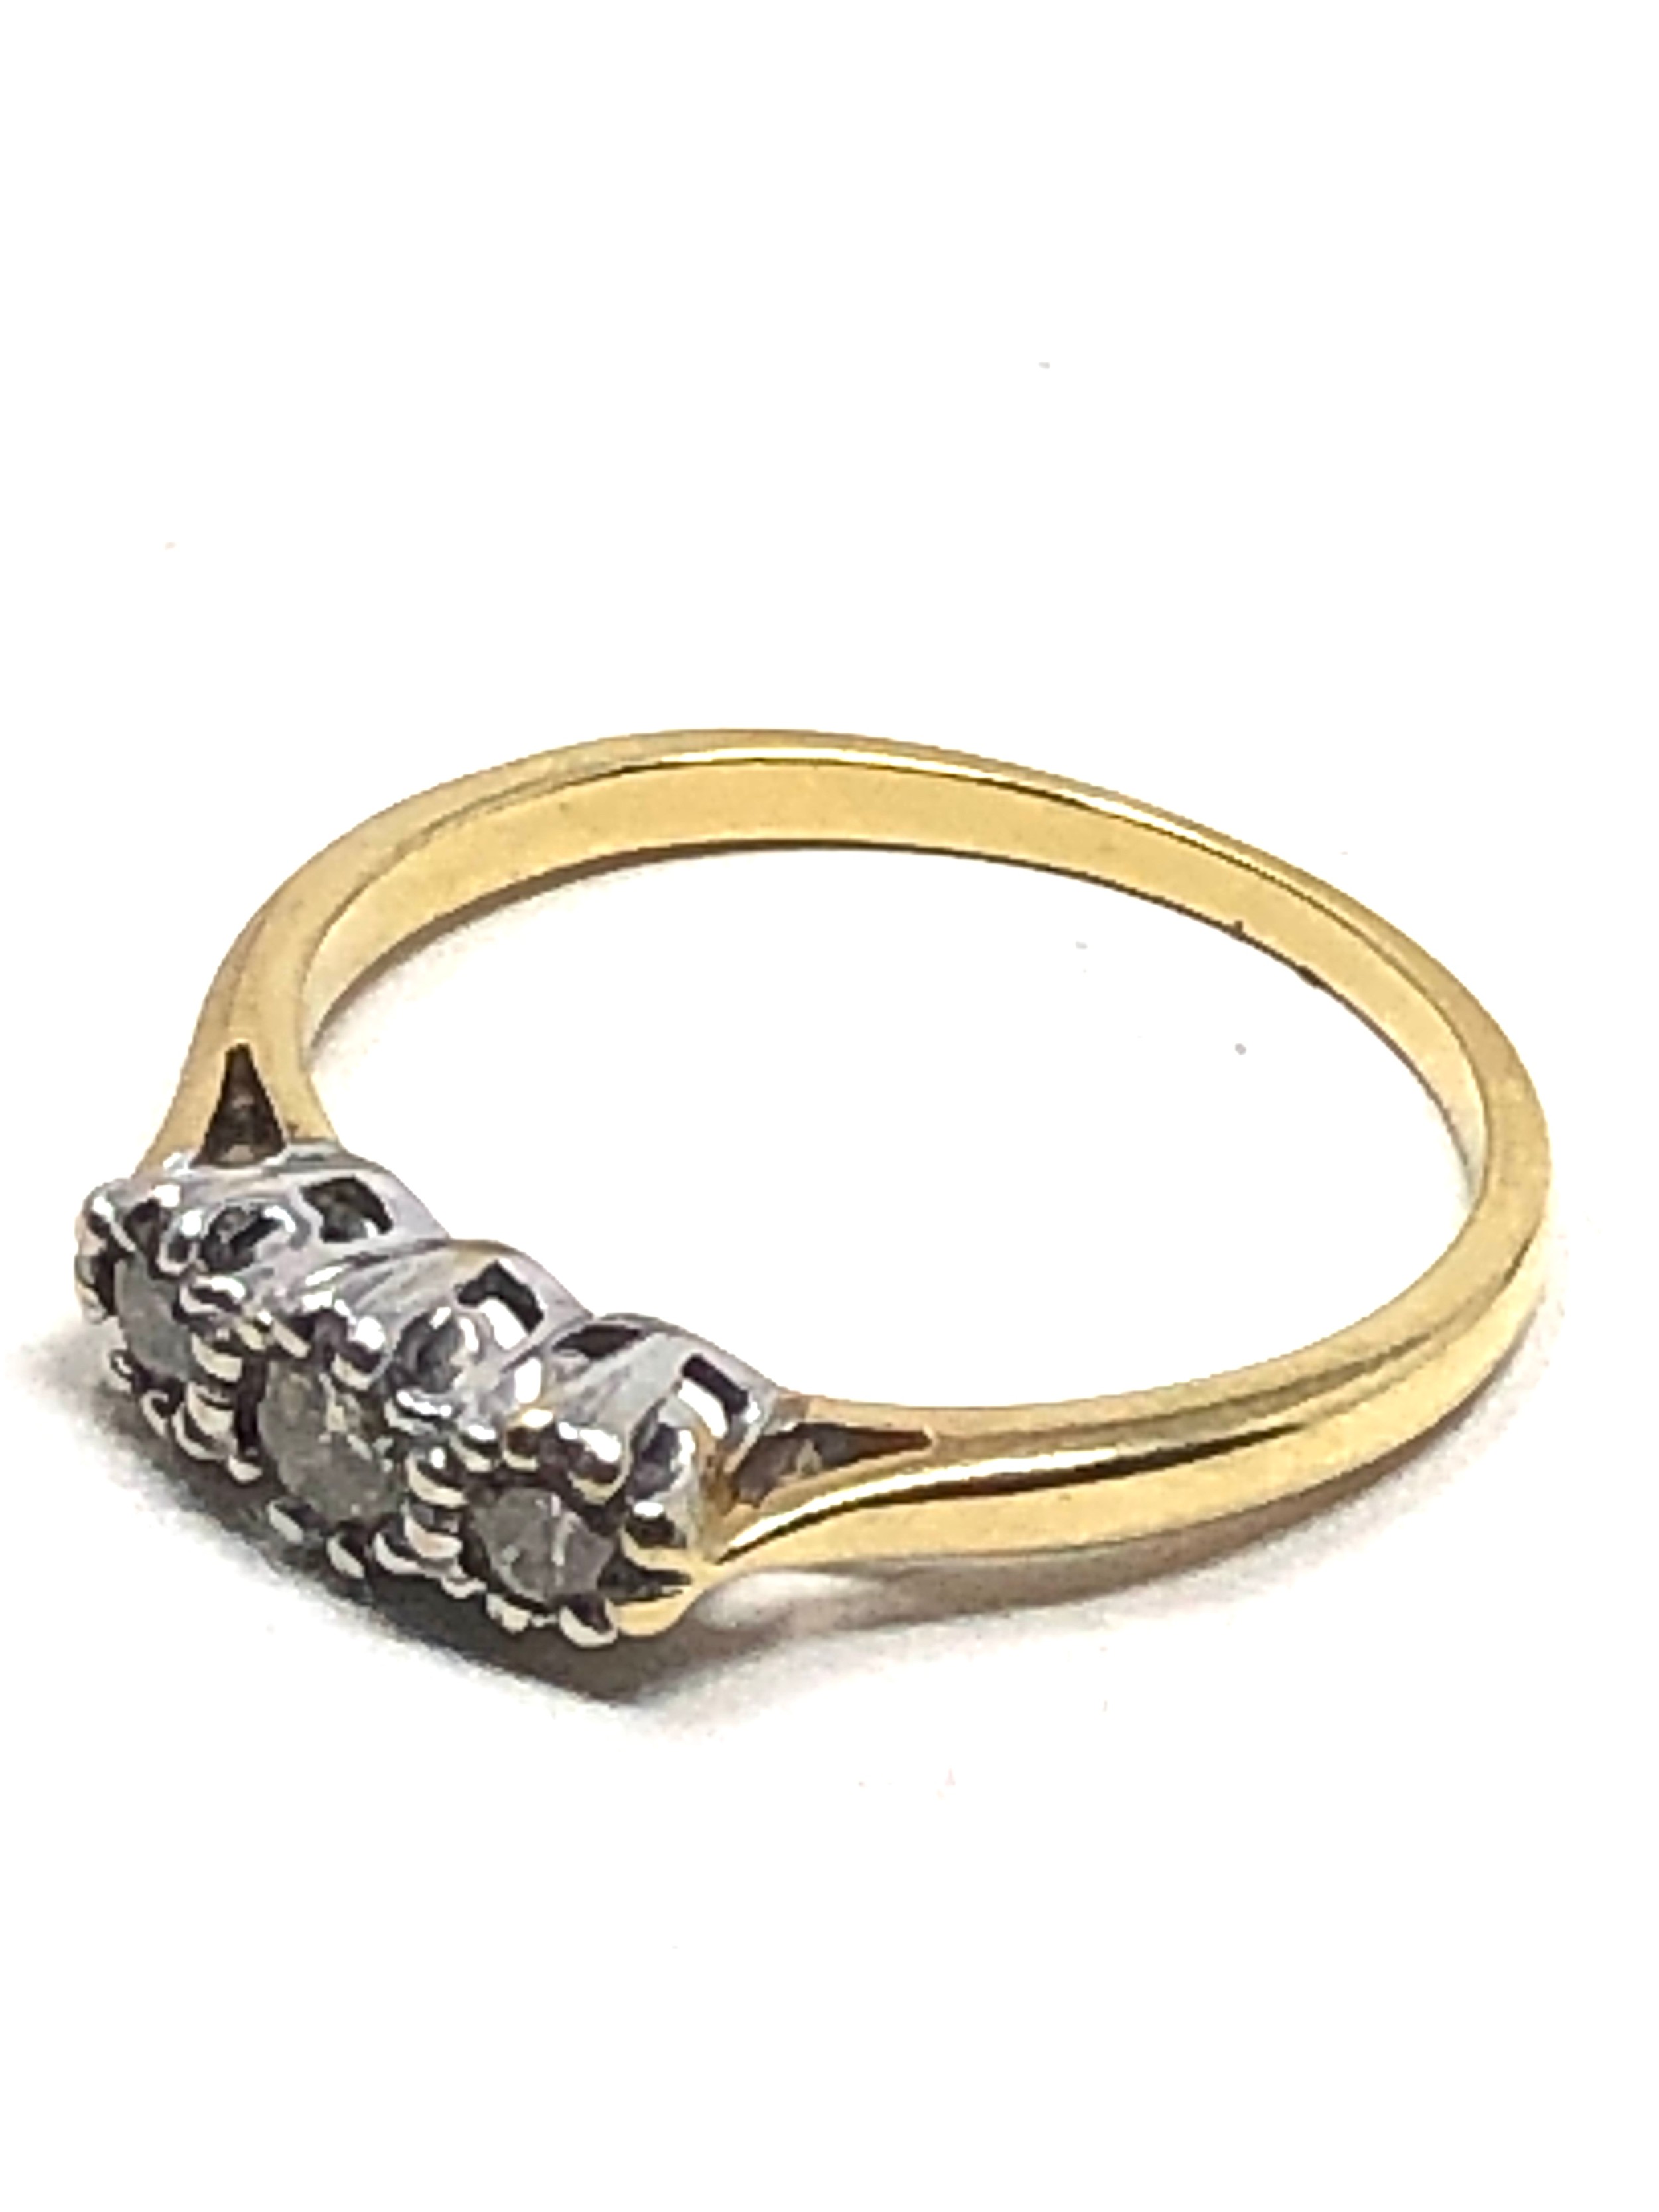 18ct gold diamond ring (2.3g) - Image 2 of 3